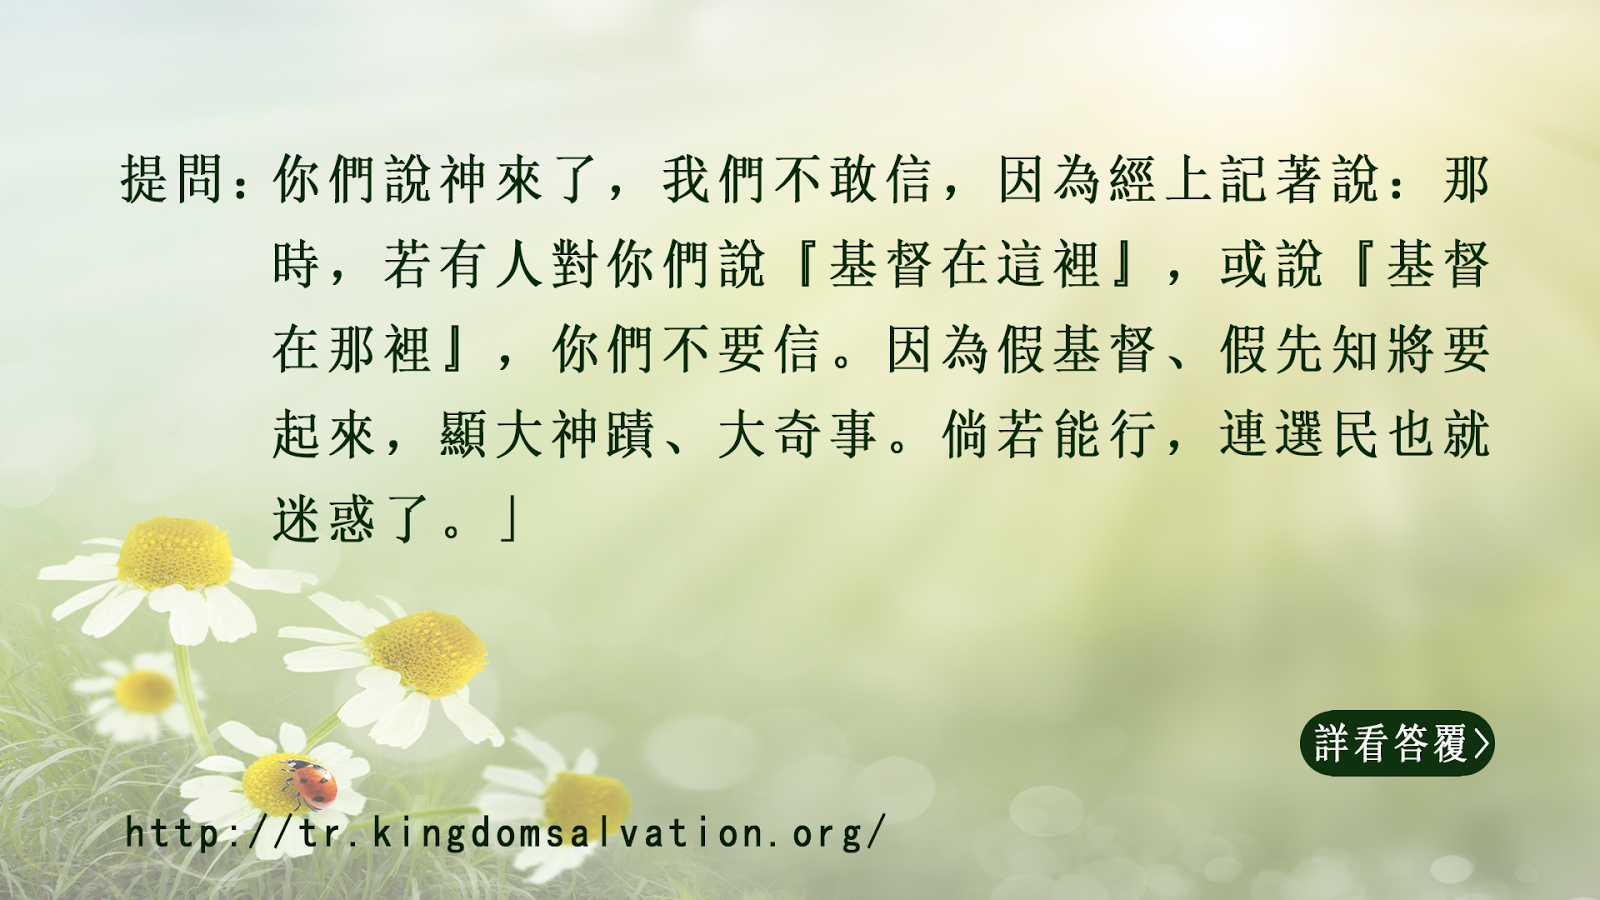 http://tr.kingdomsalvation.org/fuyin-003.html